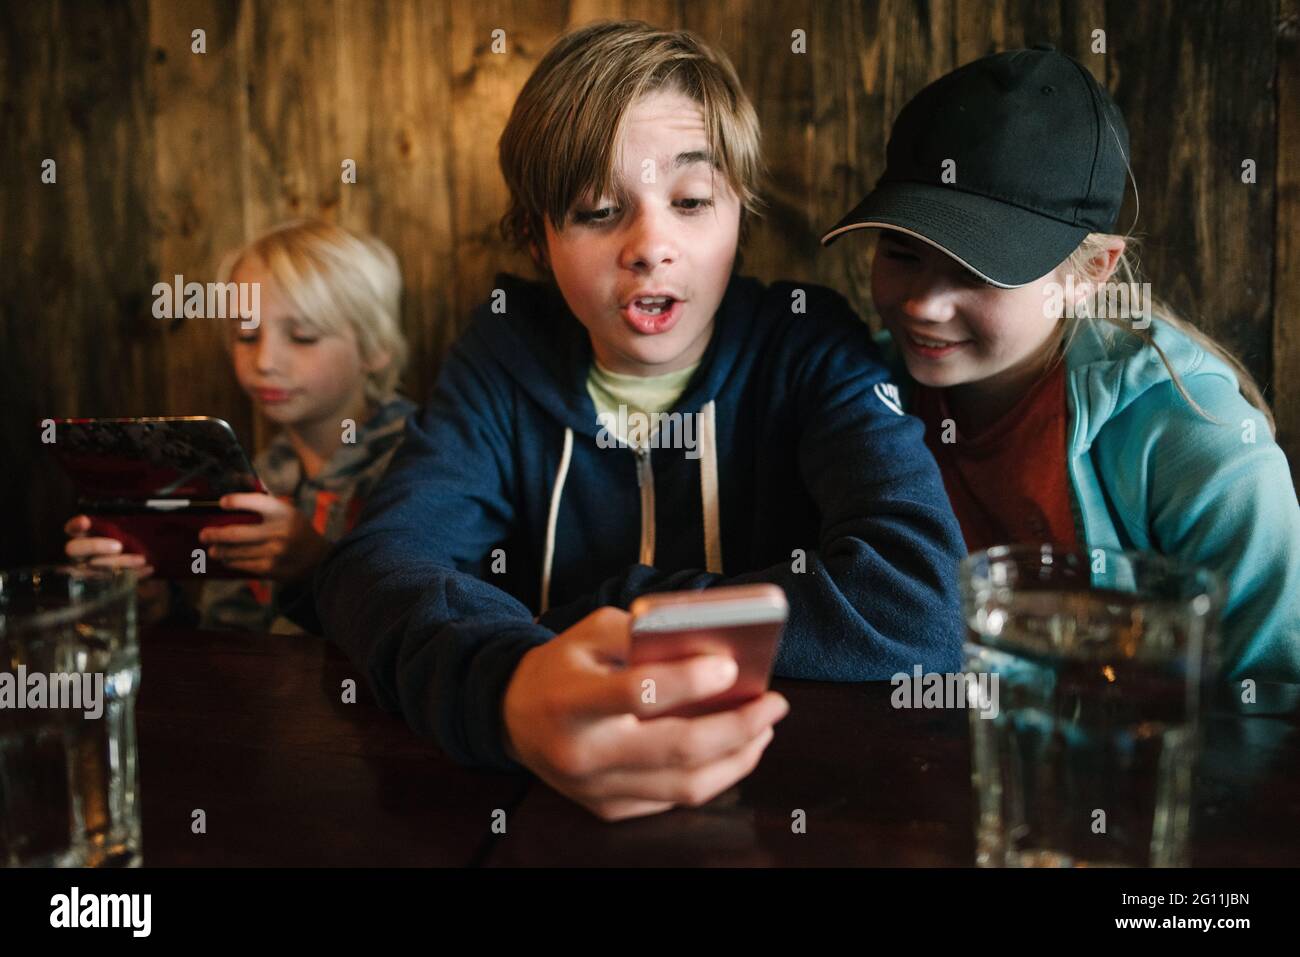 USA, California, San Francisco, Children looking at smart phones Stock Photo